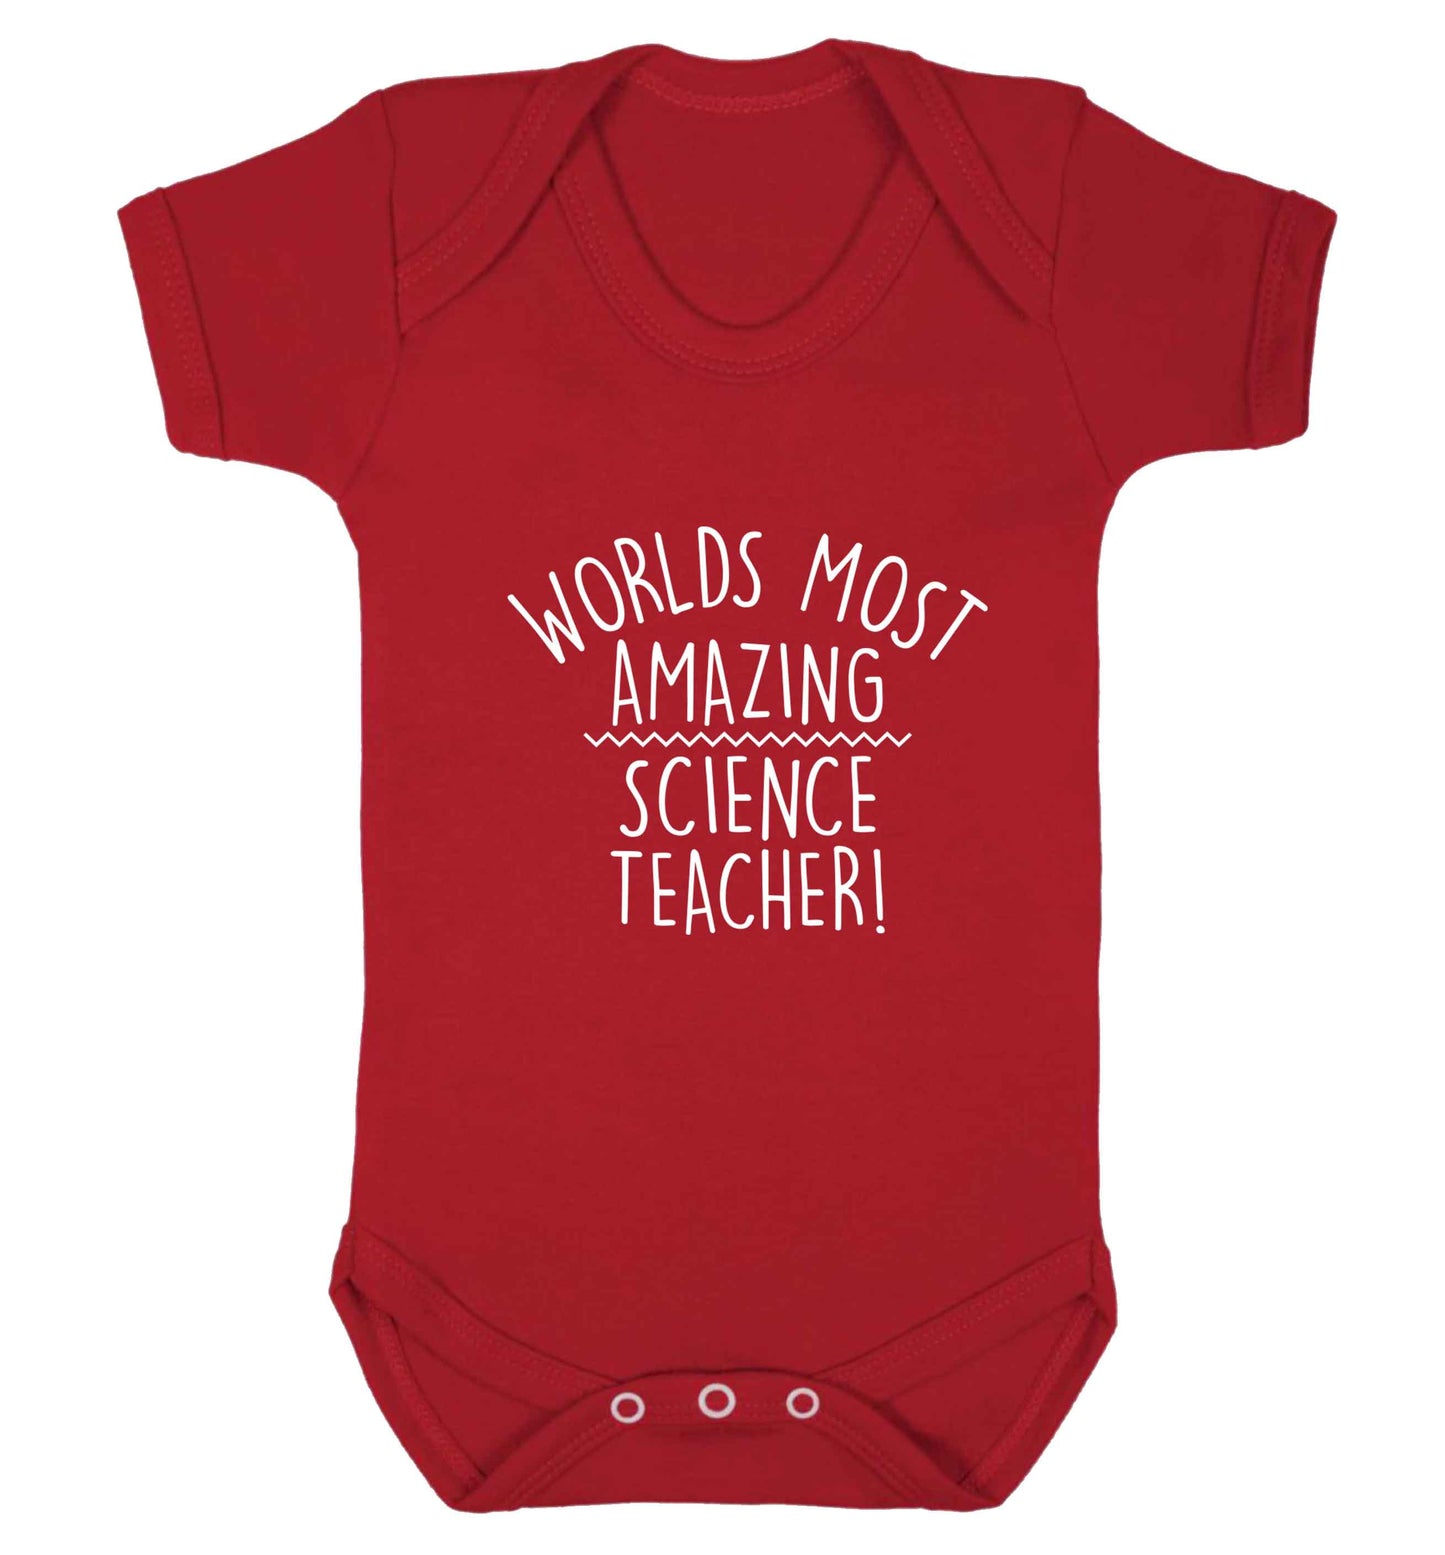 Worlds most amazing science teacher baby vest red 18-24 months